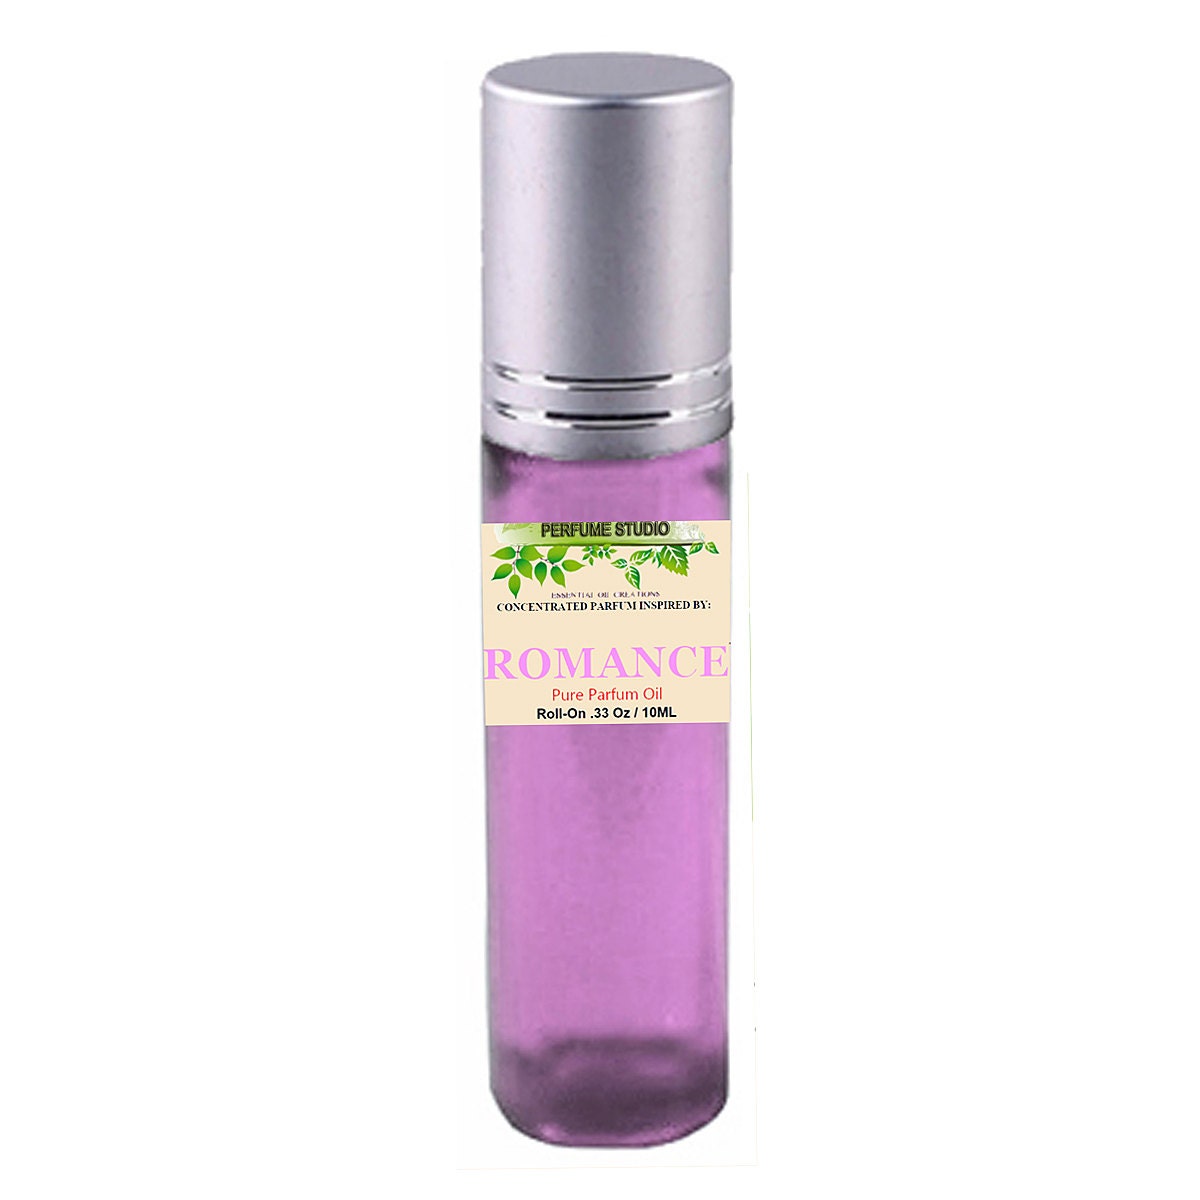 Our Premium Custom Blend Perfume Oil With Similar Base Notes Of Rl Romance For Women in A 10Ml Purple Glass Roller Bottle